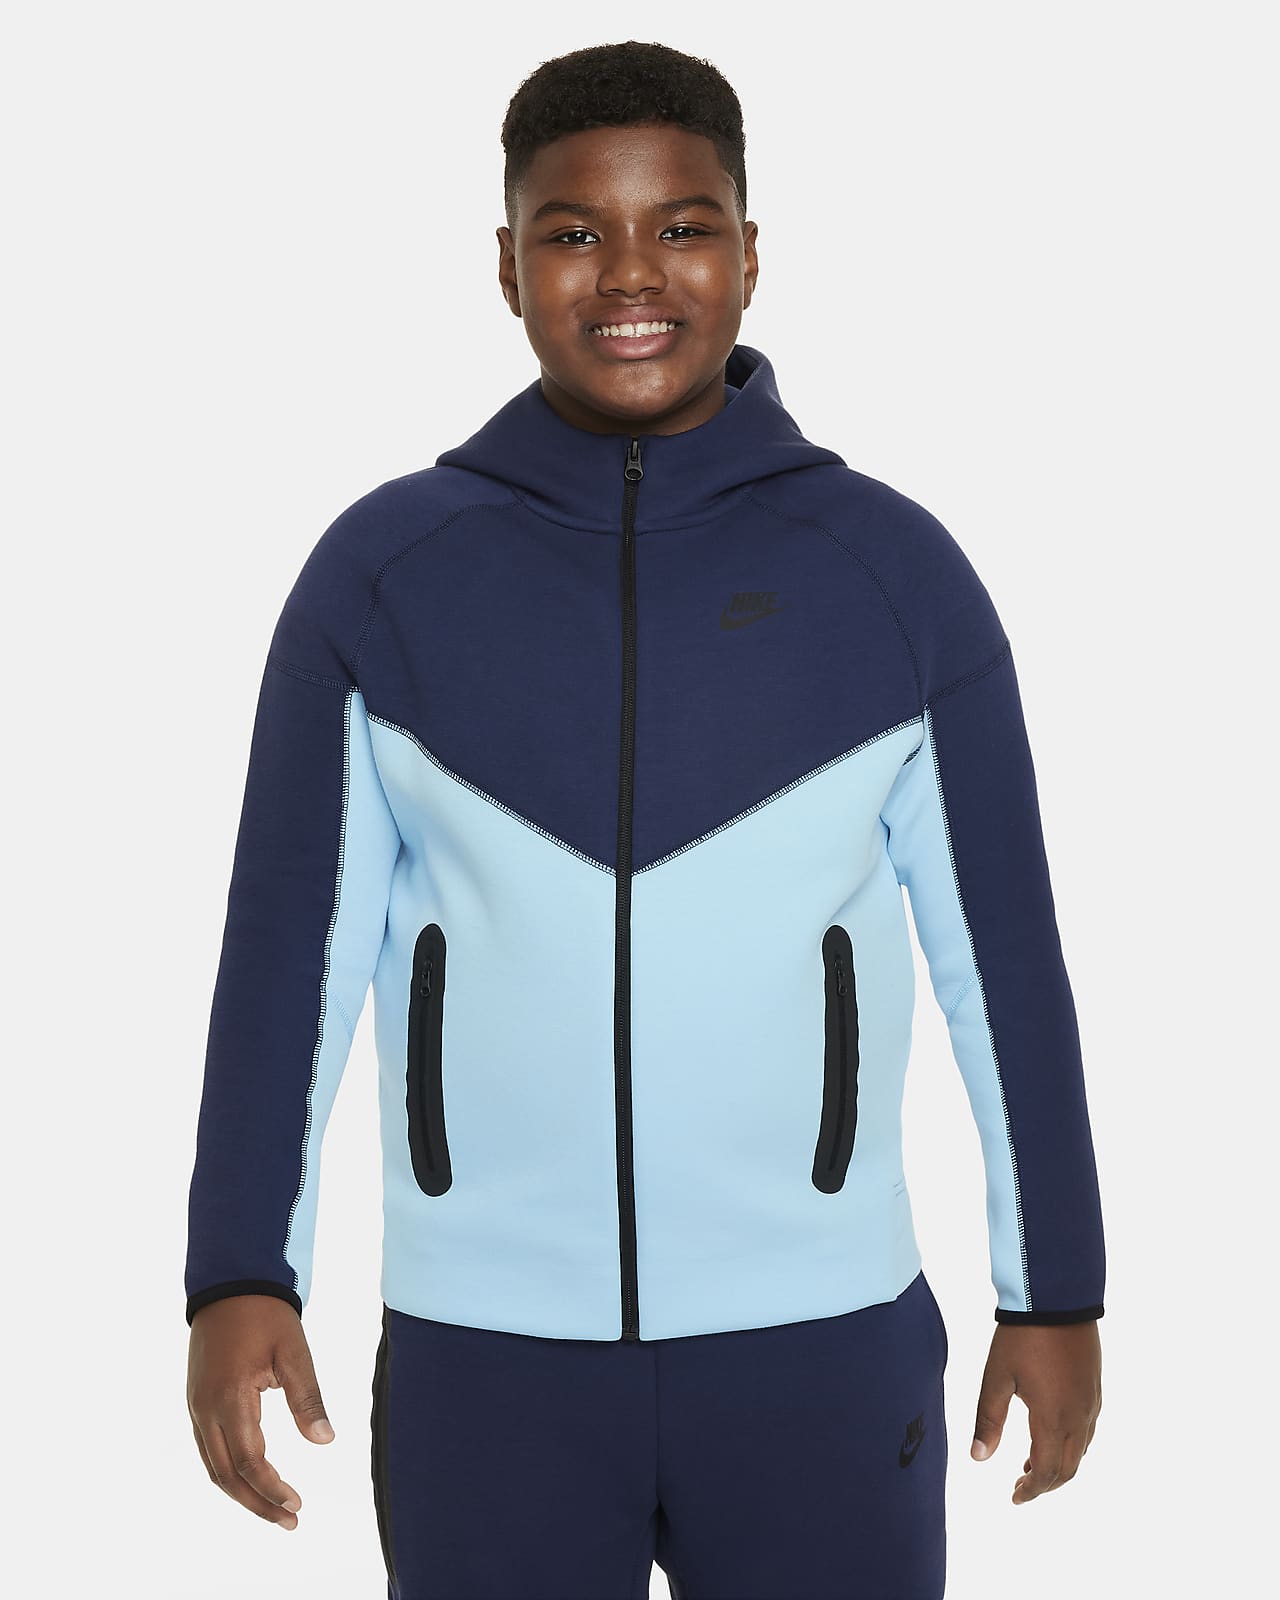 Sweat à capuche à zip Nike Sportswear Tech Fleece pour Homme - Bleu